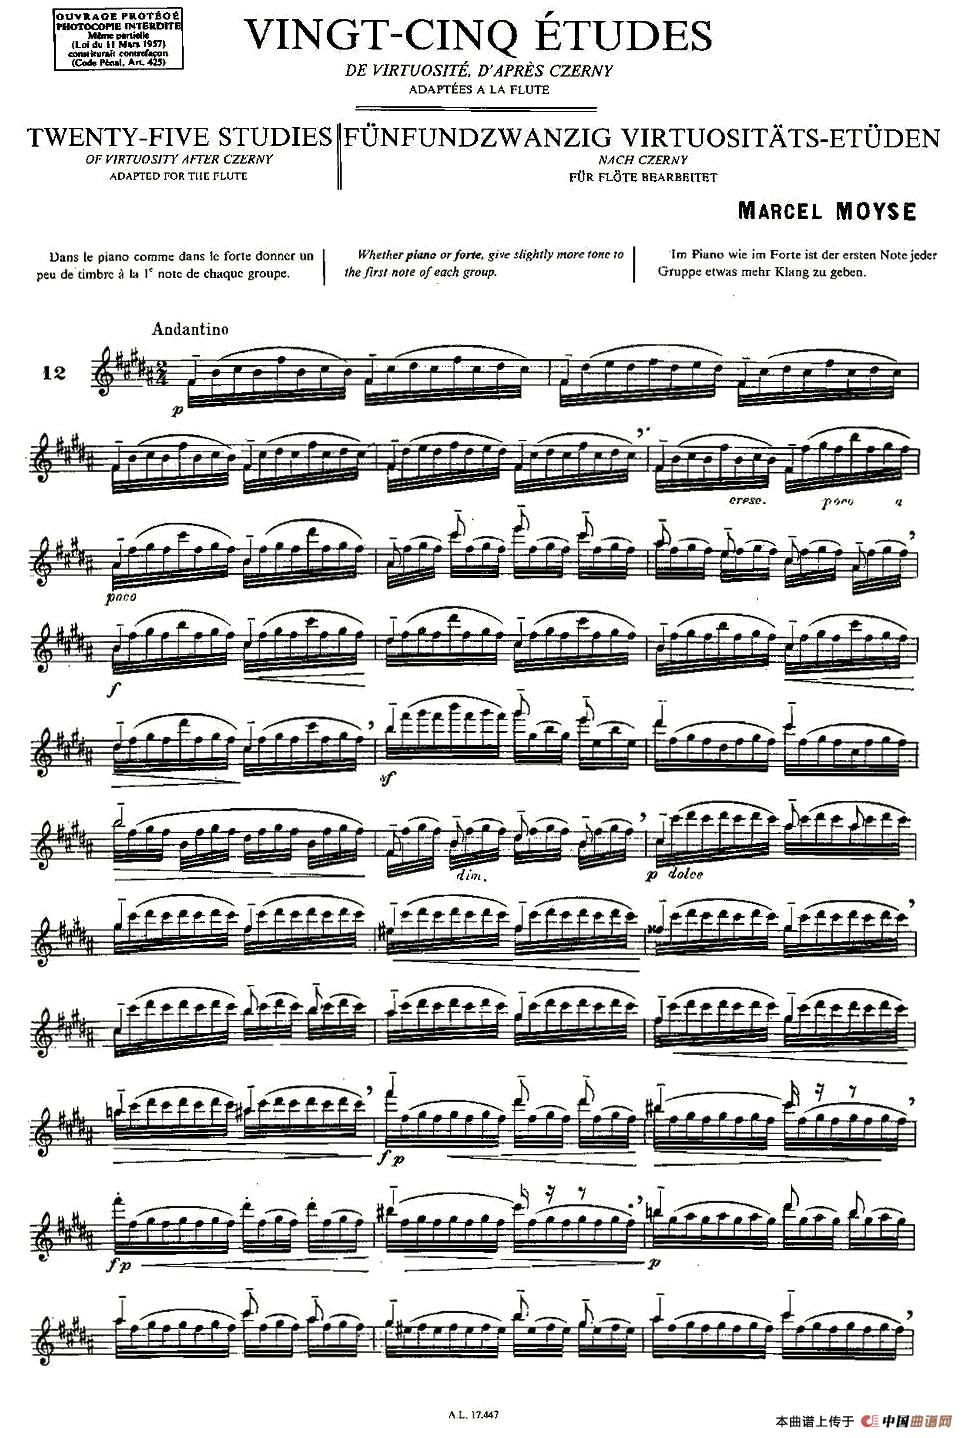 Moyse - 25 Studies after Czerny flute  [12]（25首改编自车